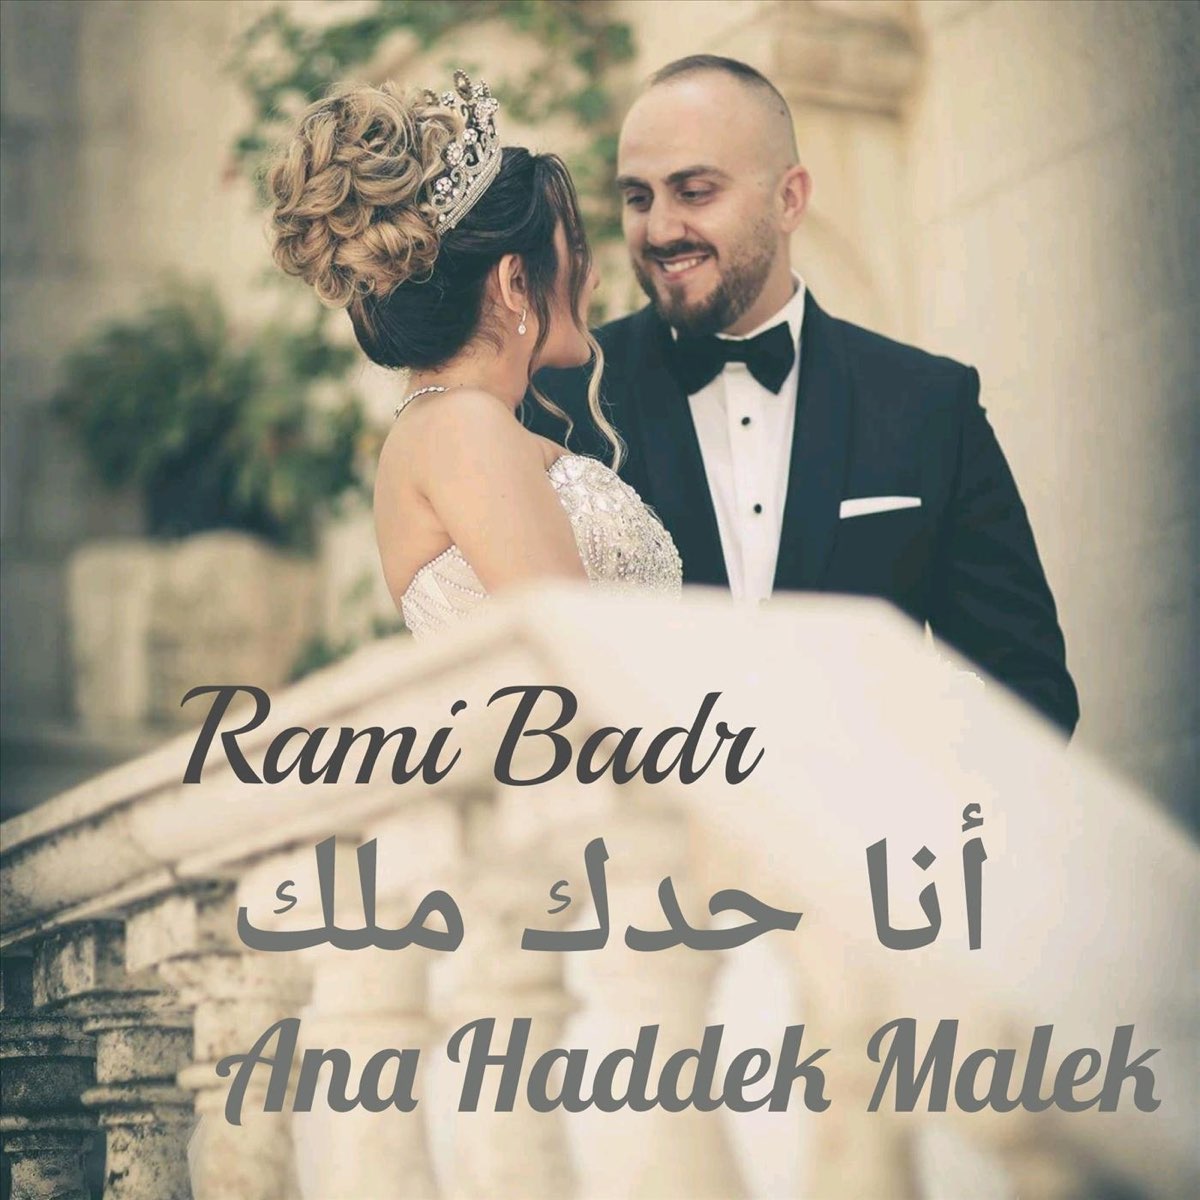 Ana Haddek Malek - Single by Rami Badr on Apple Music